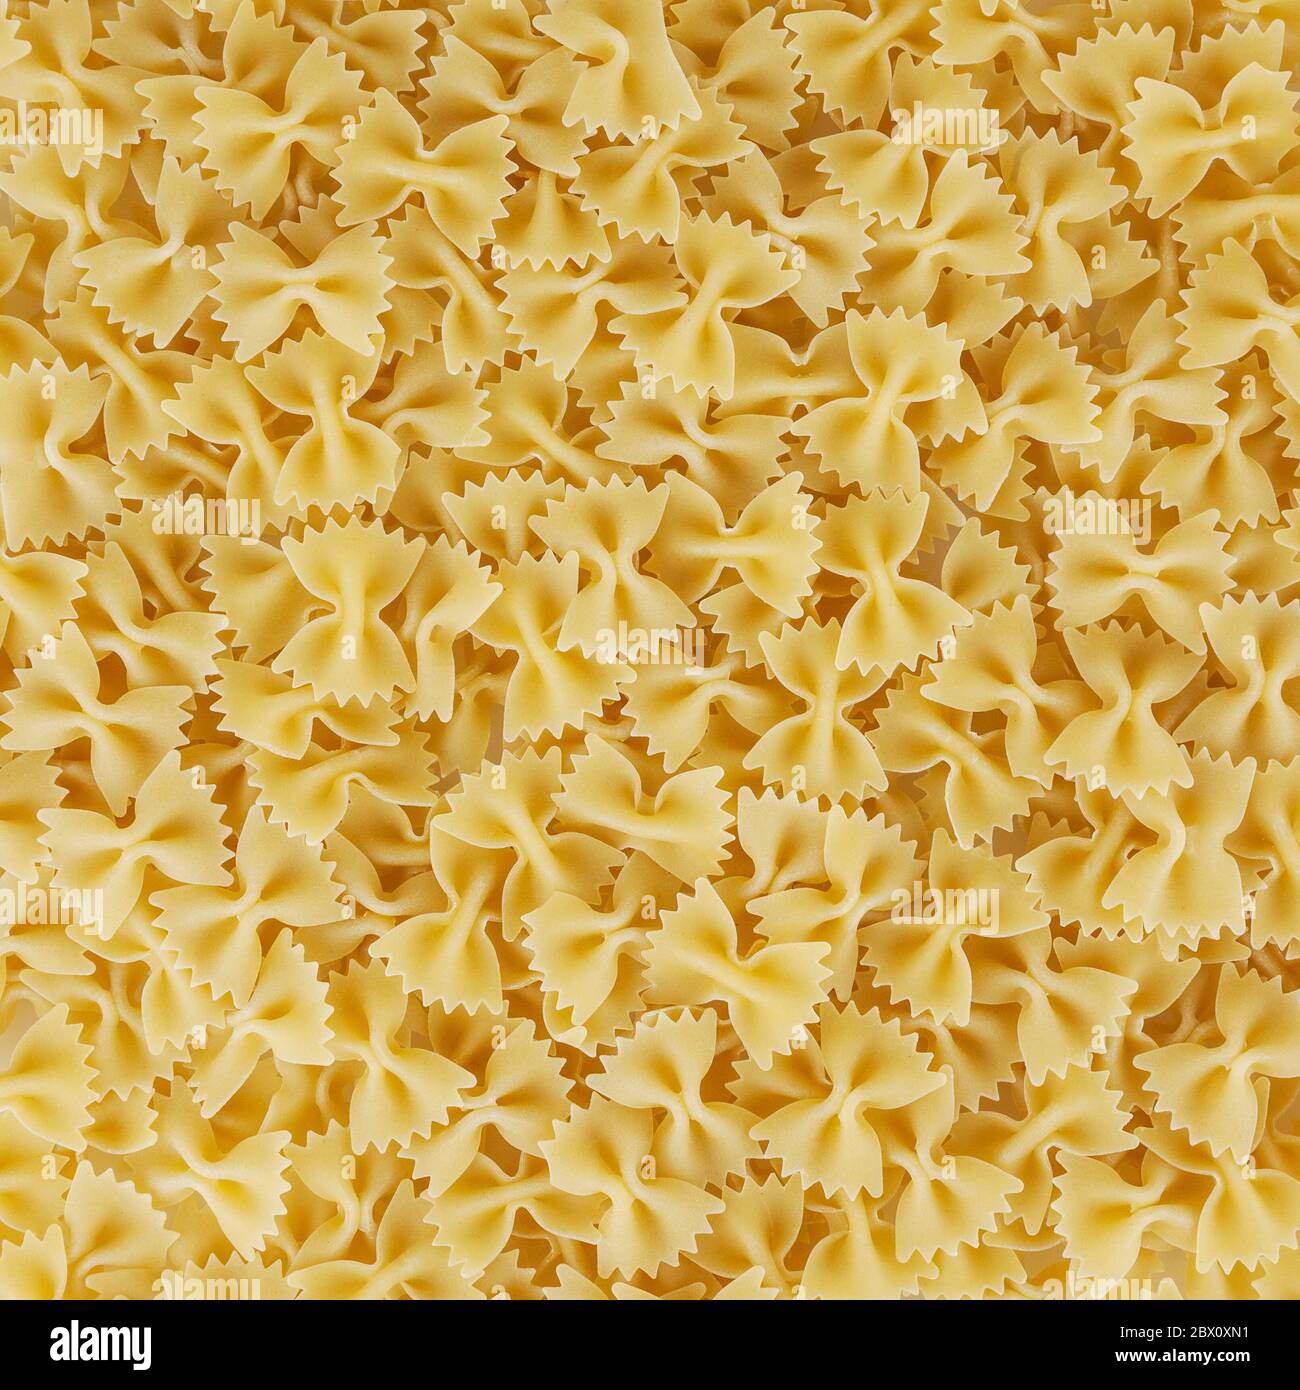 Bow tie pasta background Stock Photo